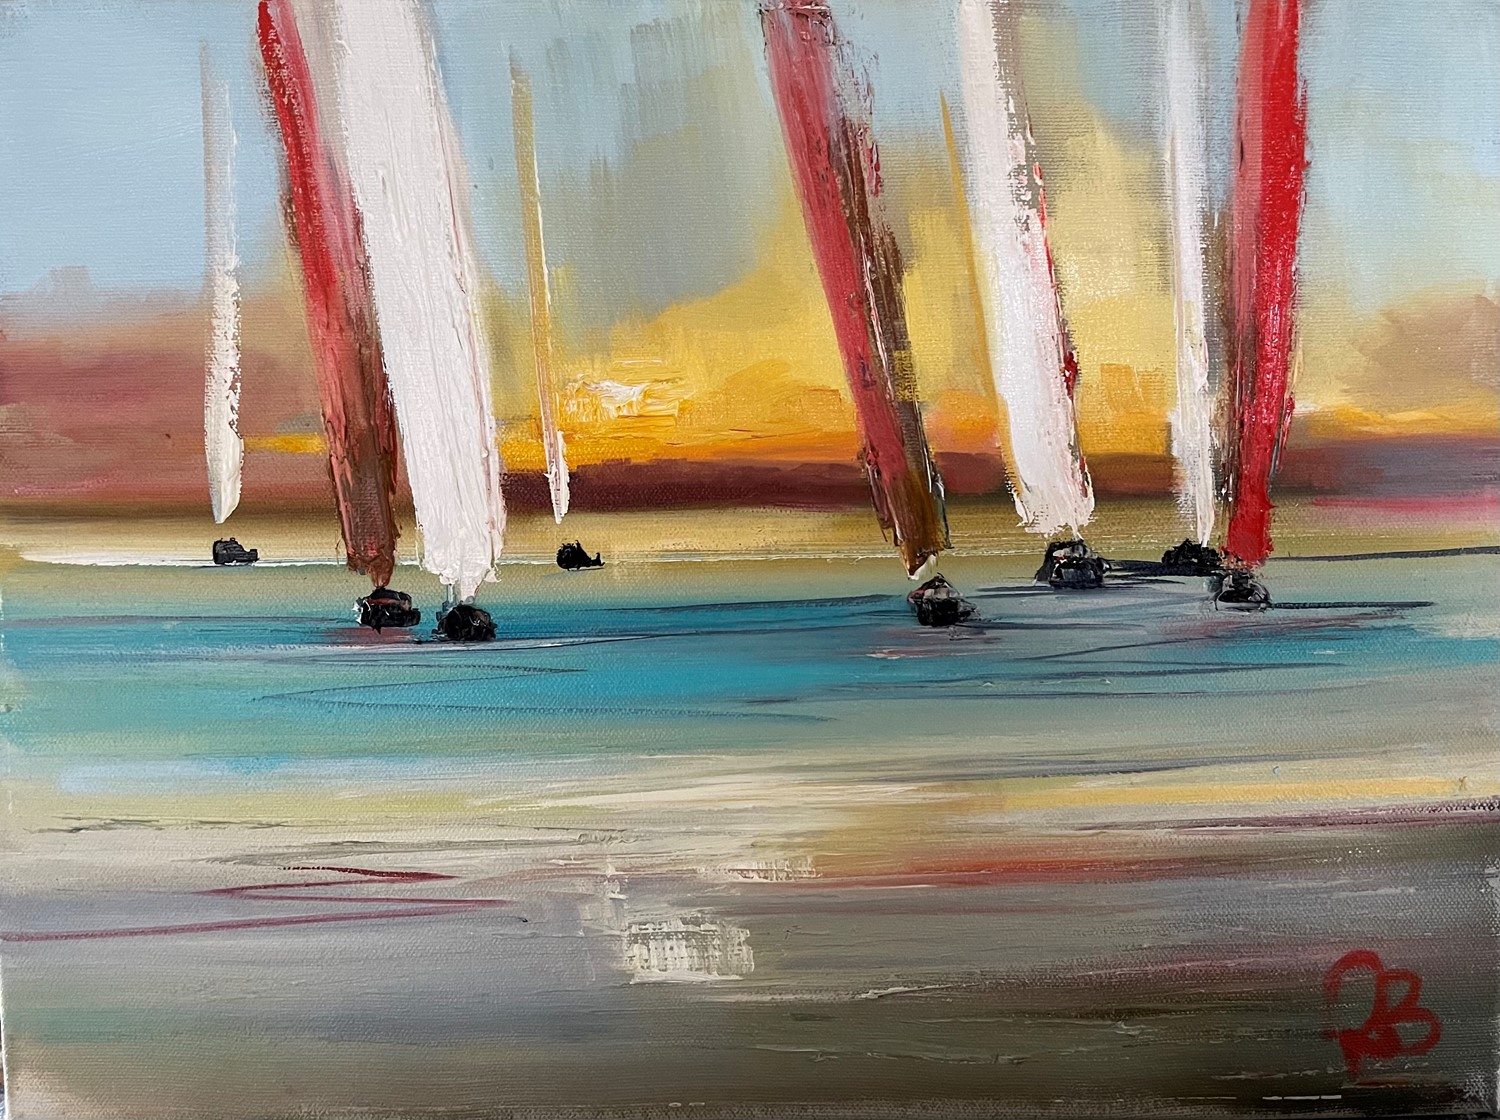 'Sails against a sunset ' by artist Rosanne Barr